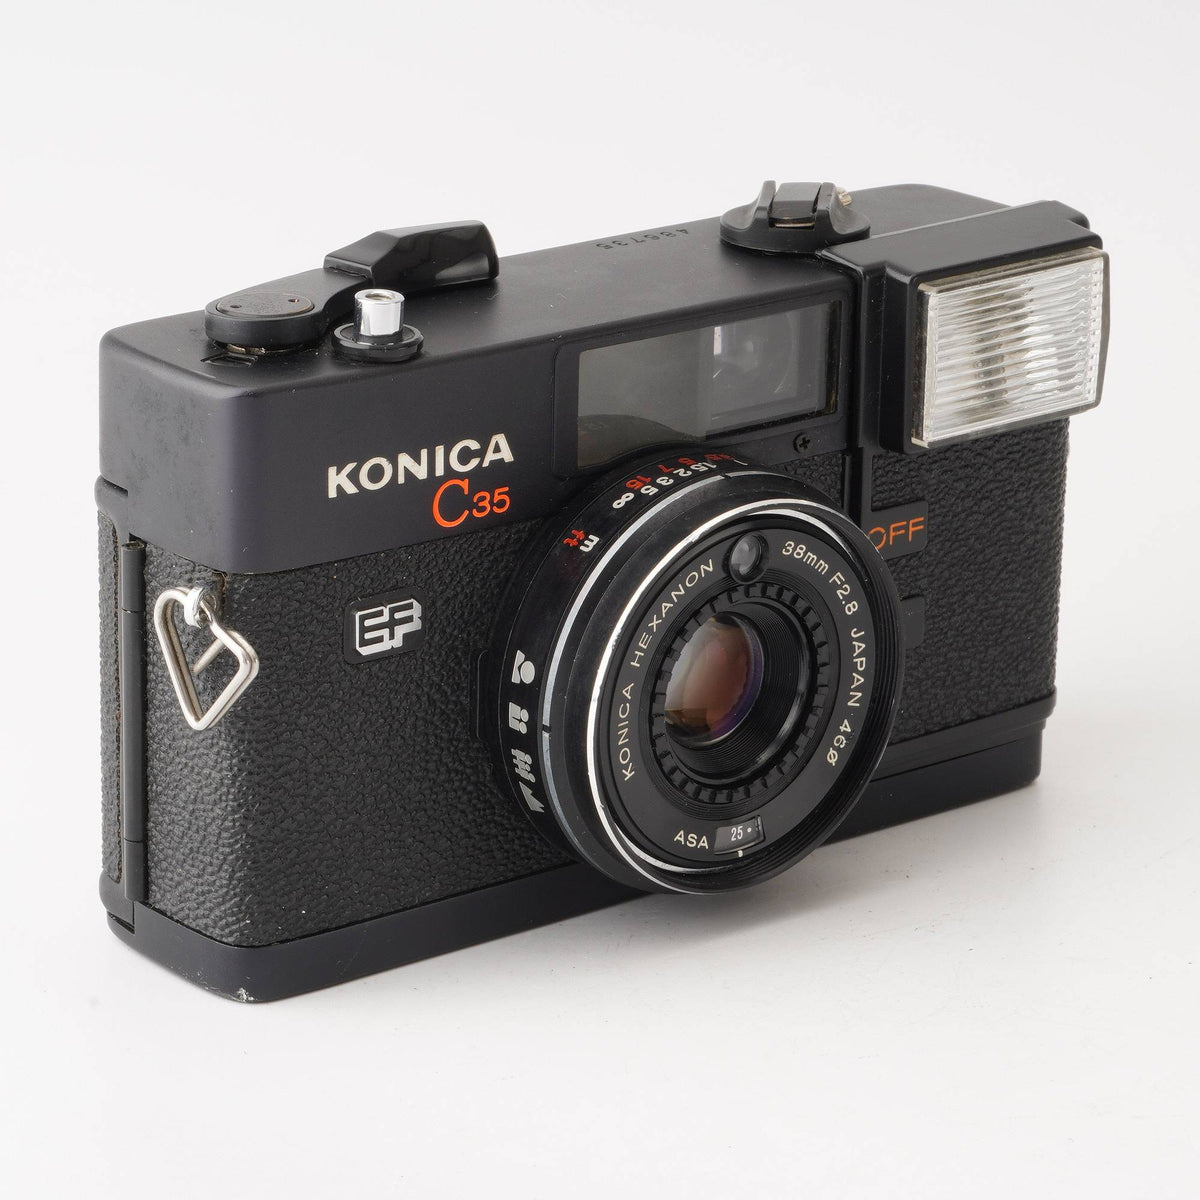 Konica C35 EF フィルムカメラ【作例あり】 - カメラ